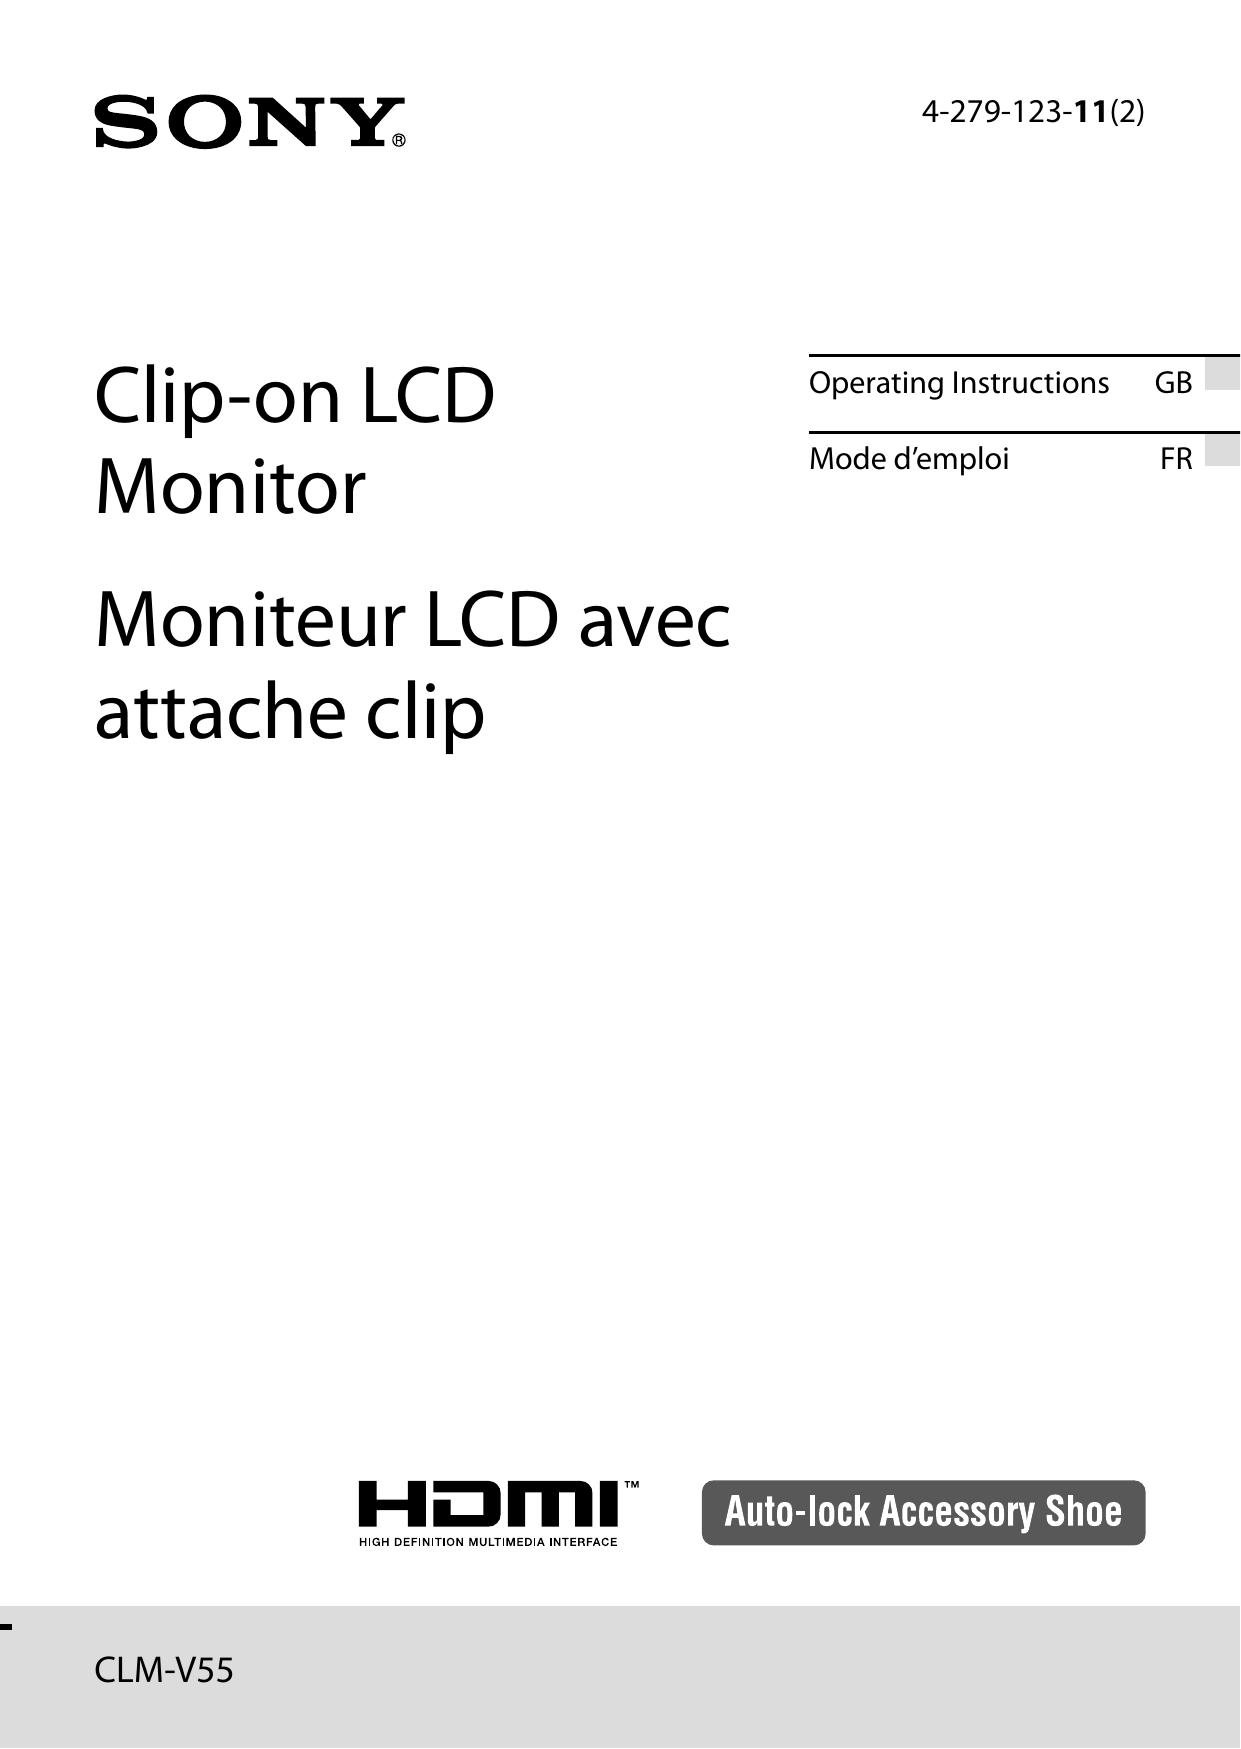 Sony CLMV55 Camera Accessories User Manual